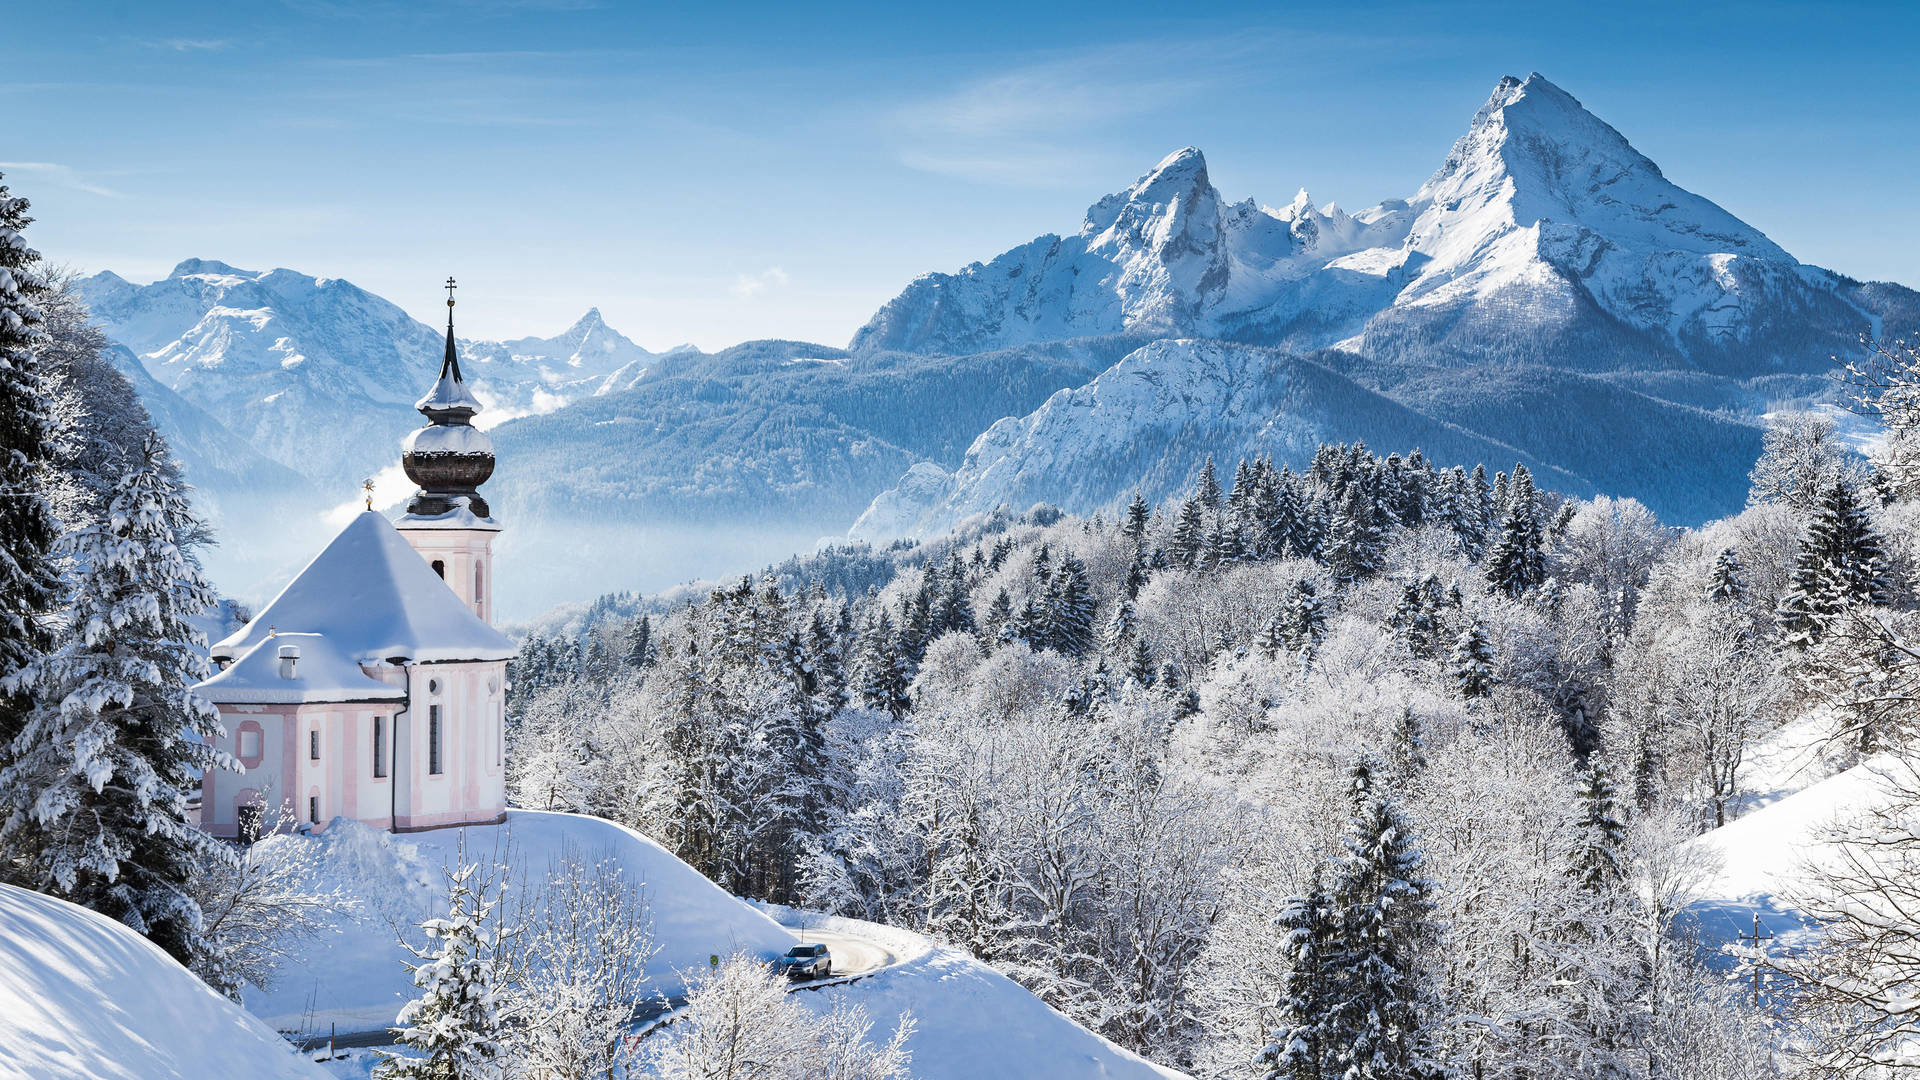 Bavarian Alps Snow Mountain In Winter